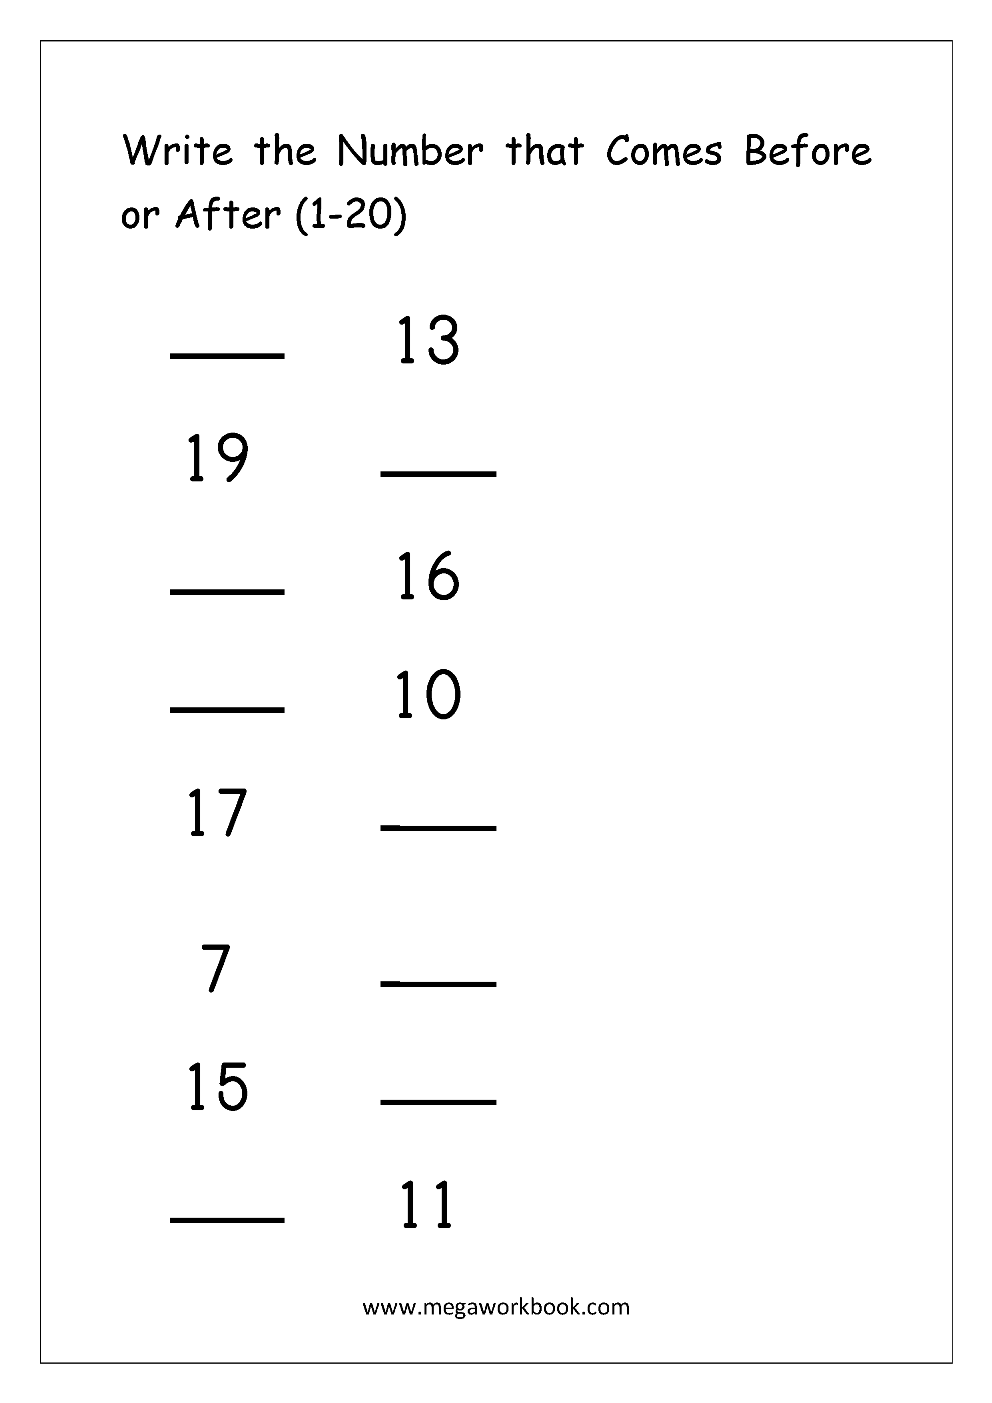 ordering-numbers-1-to-20-worksheet-math-resource-twinkl-ordering-numbers-to-20-worksheet